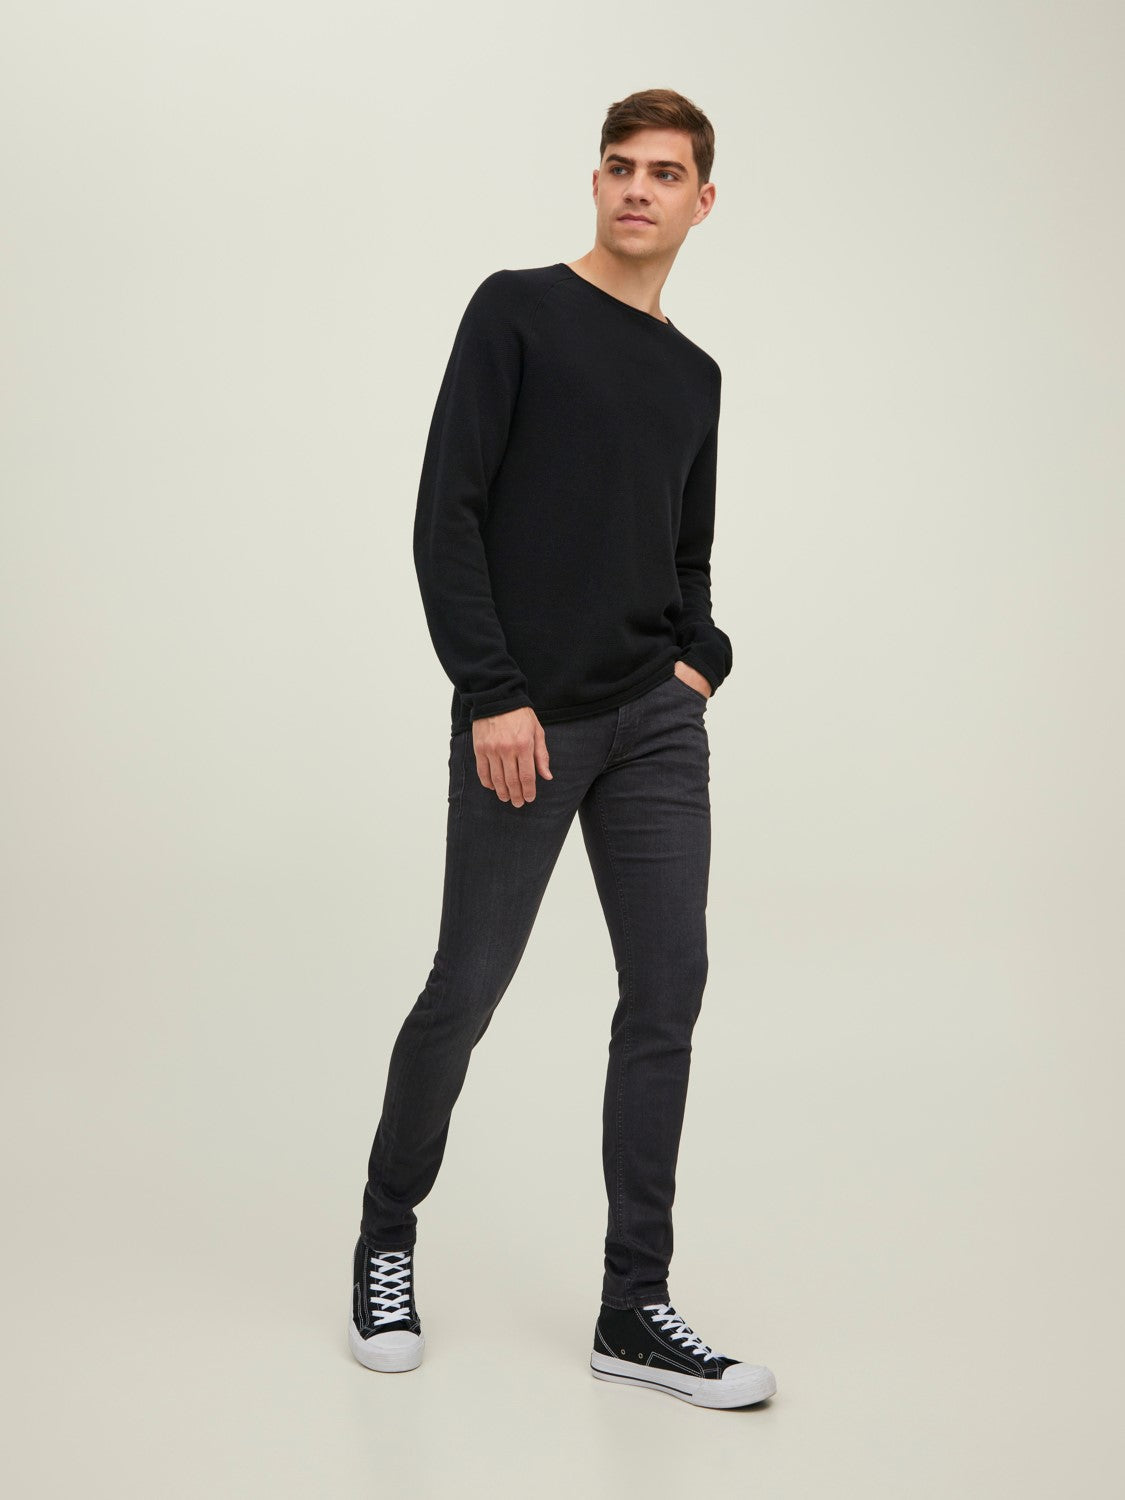 Liam Evan 359 Black Skinny Jeans-Full front view